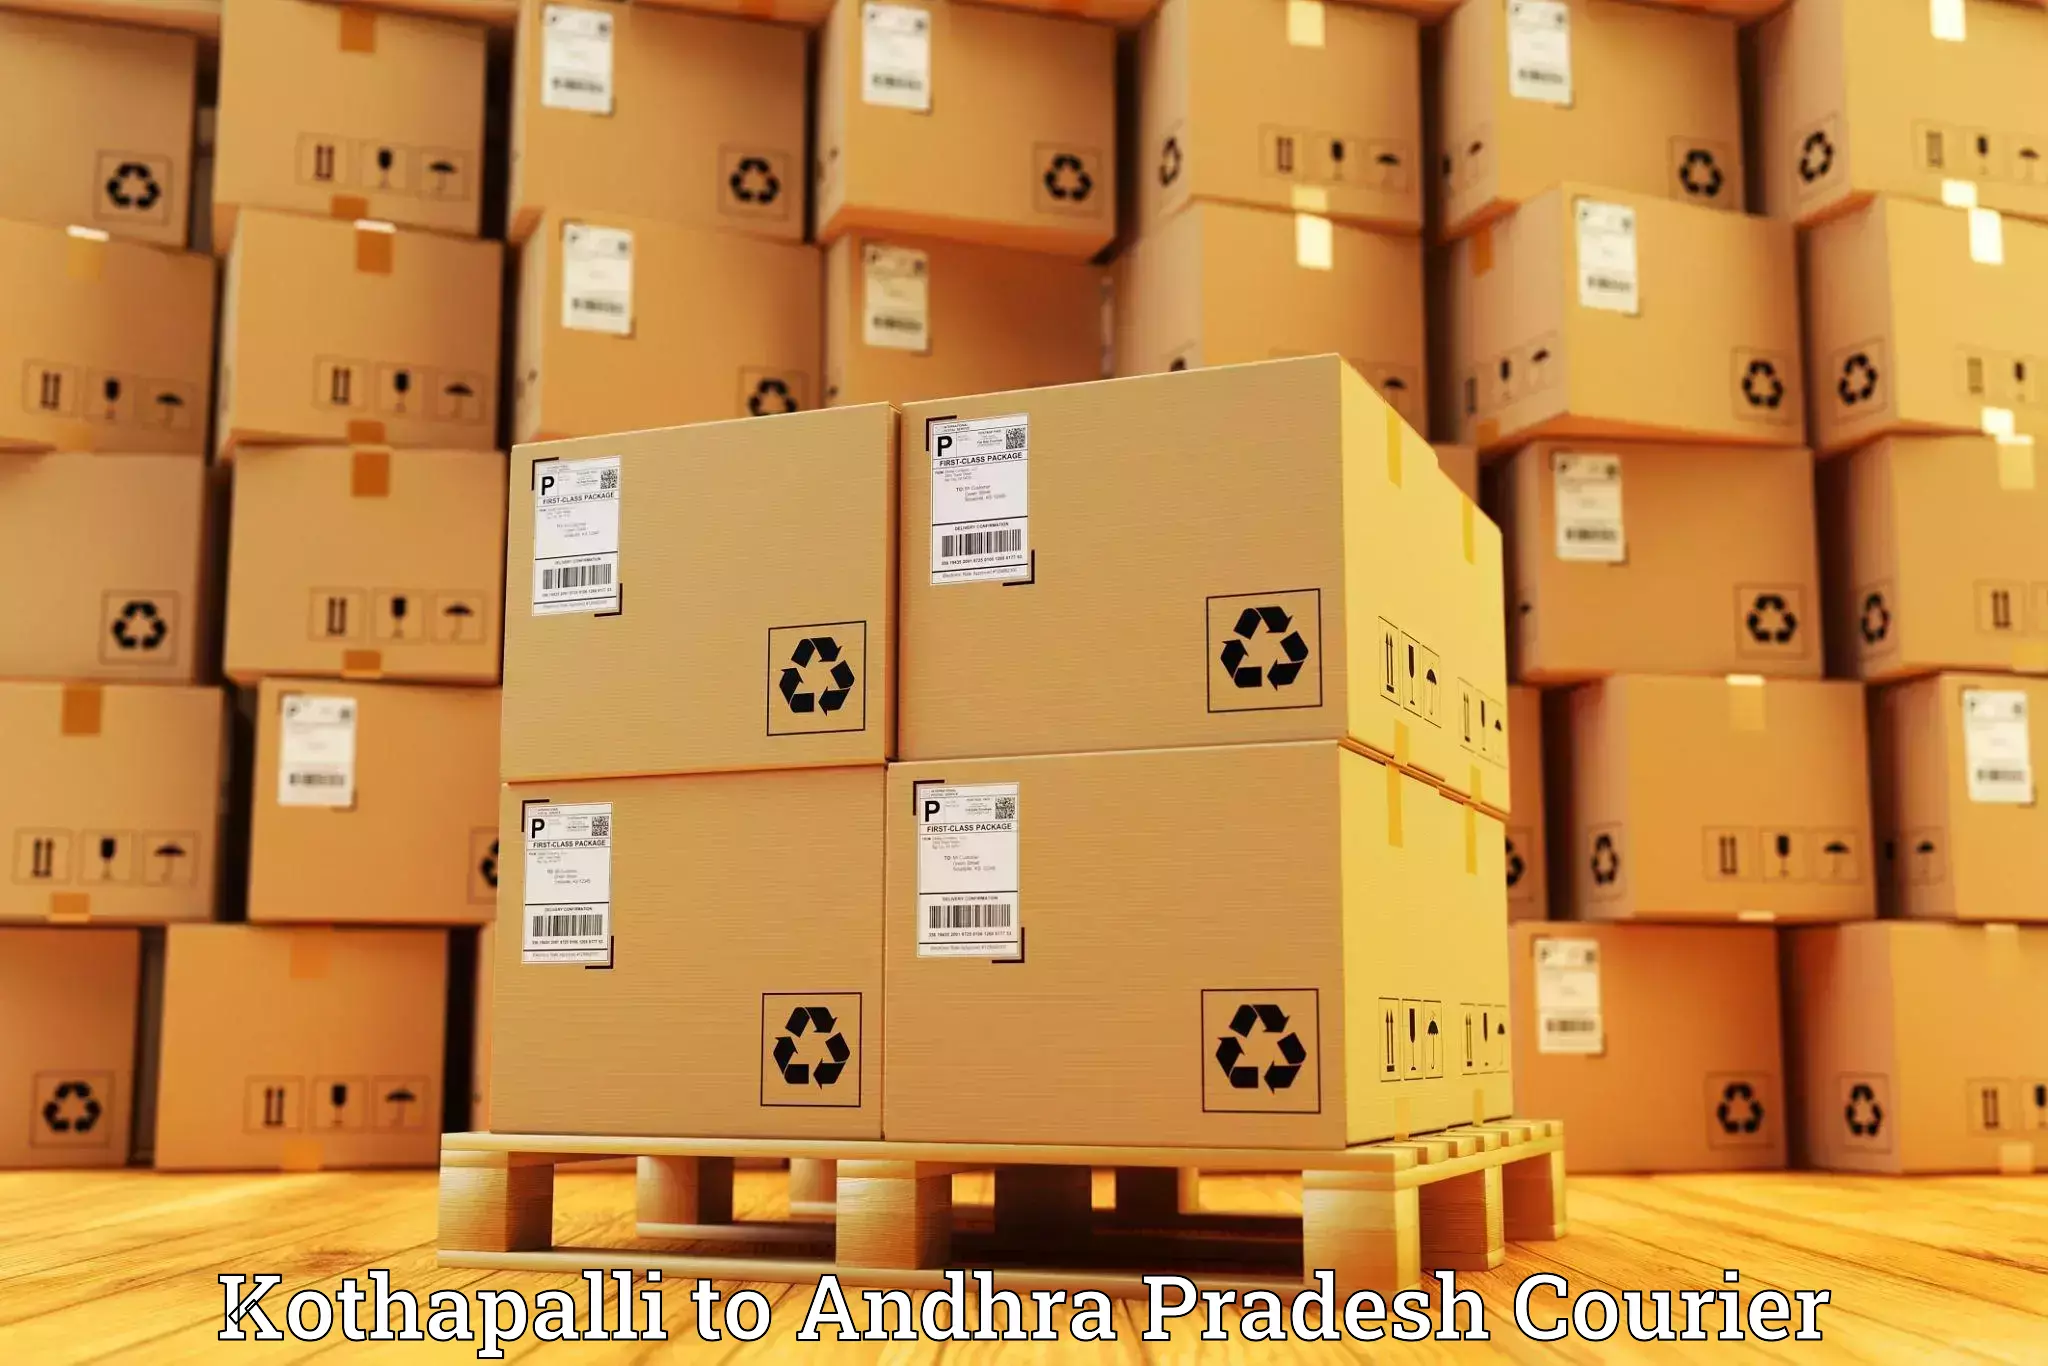 Global shipping networks Kothapalli to Galiveedu